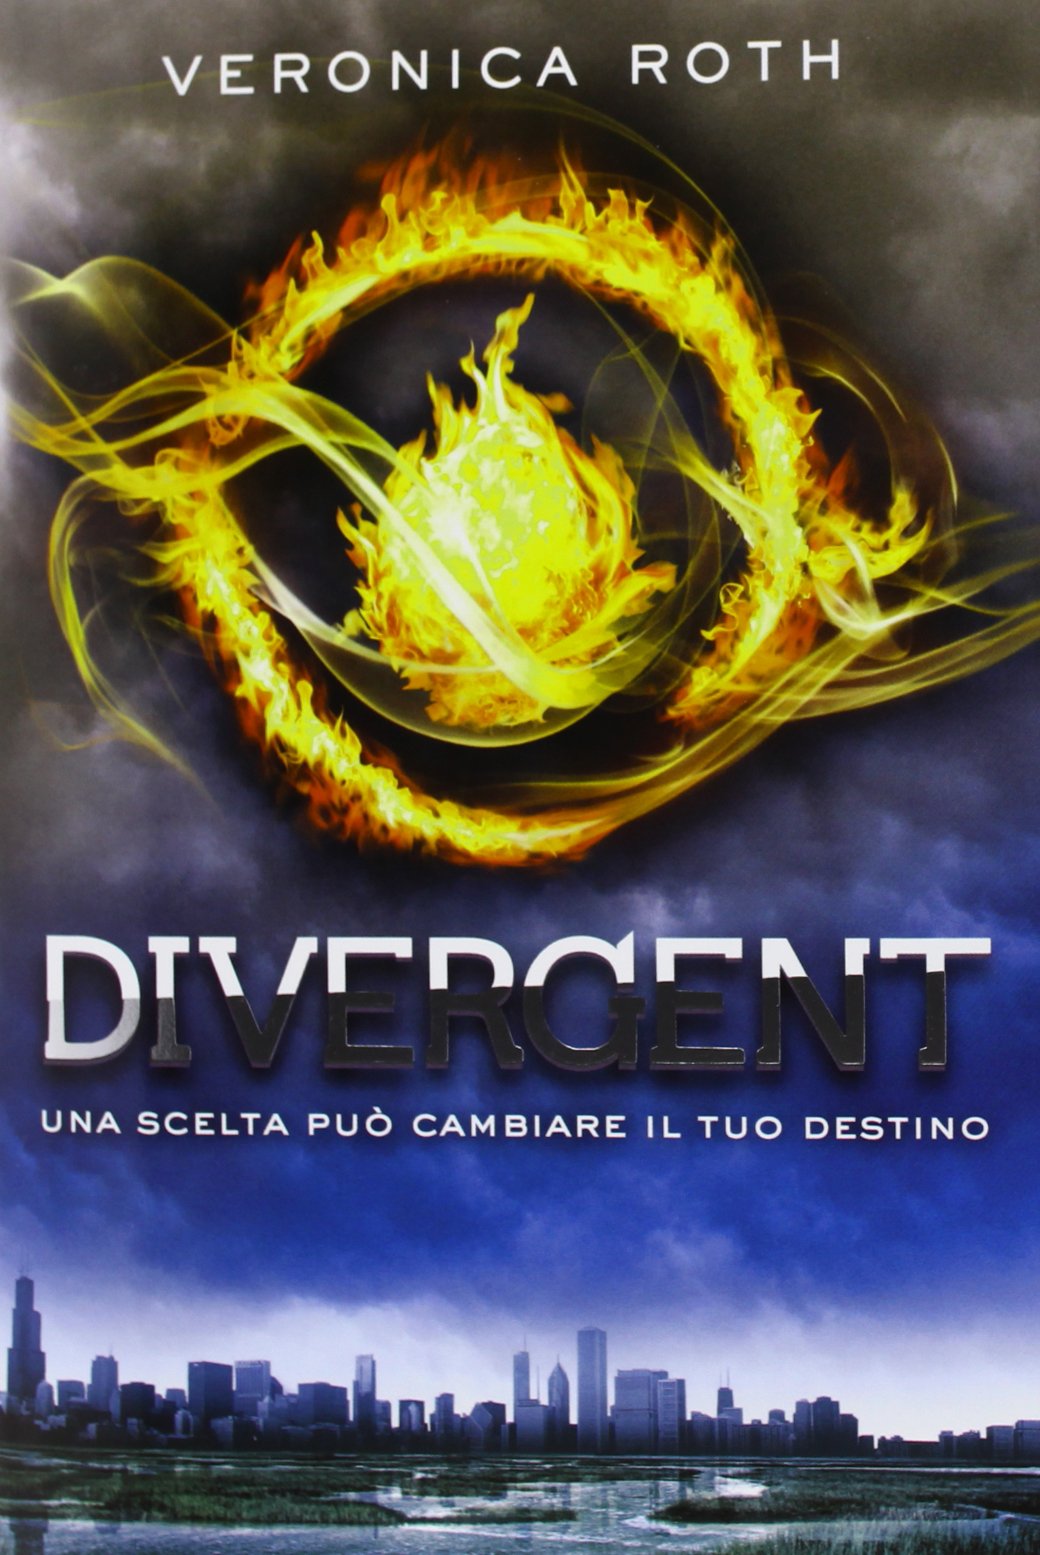 Divergent Book Cover